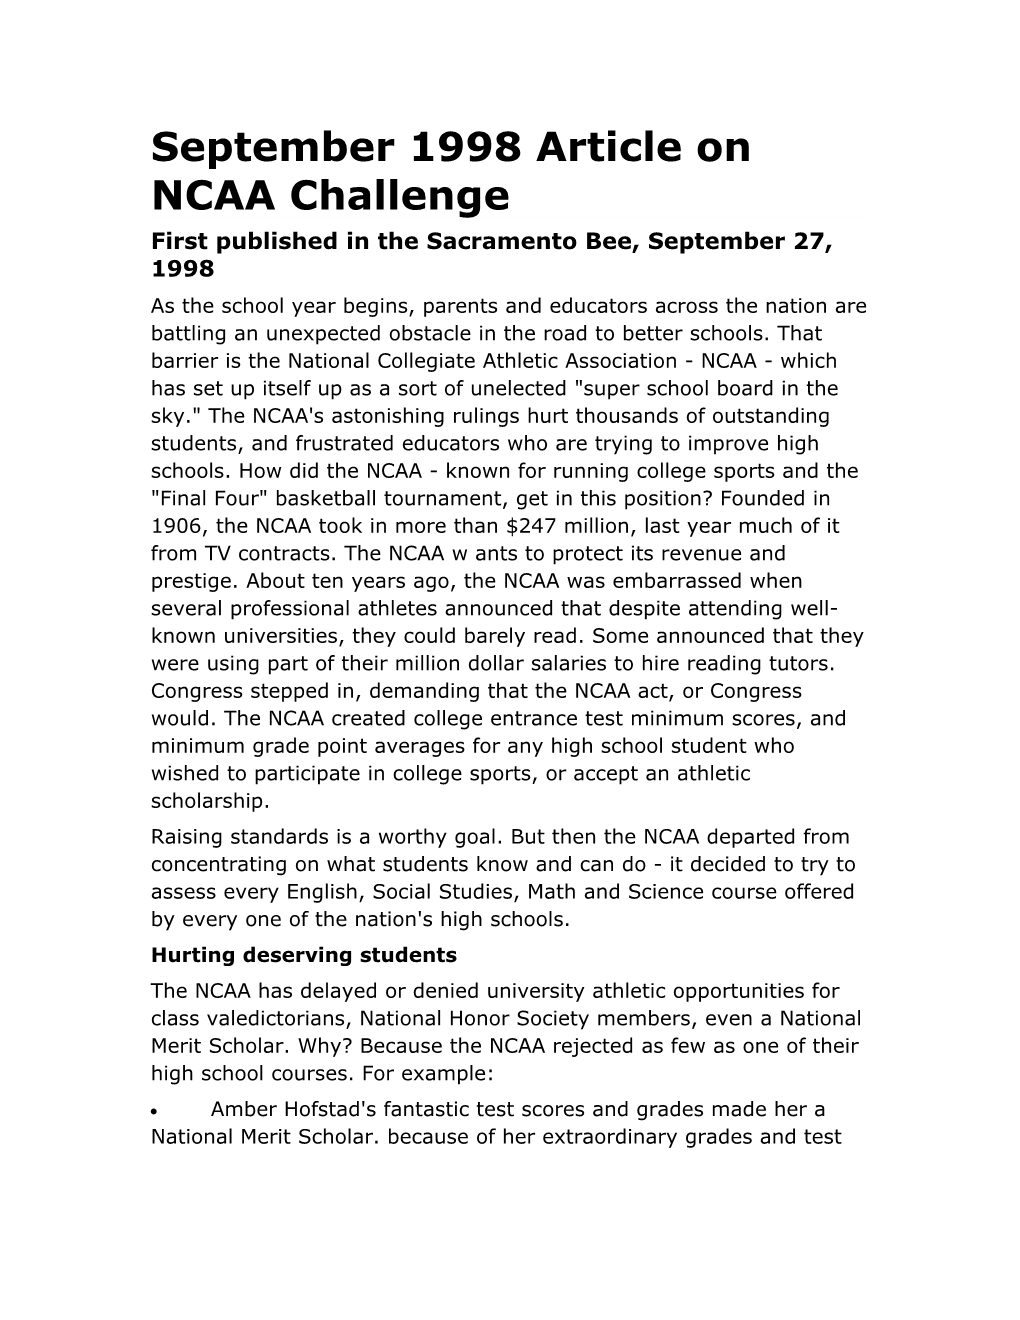 September 1998 Article on NCAA Challenge